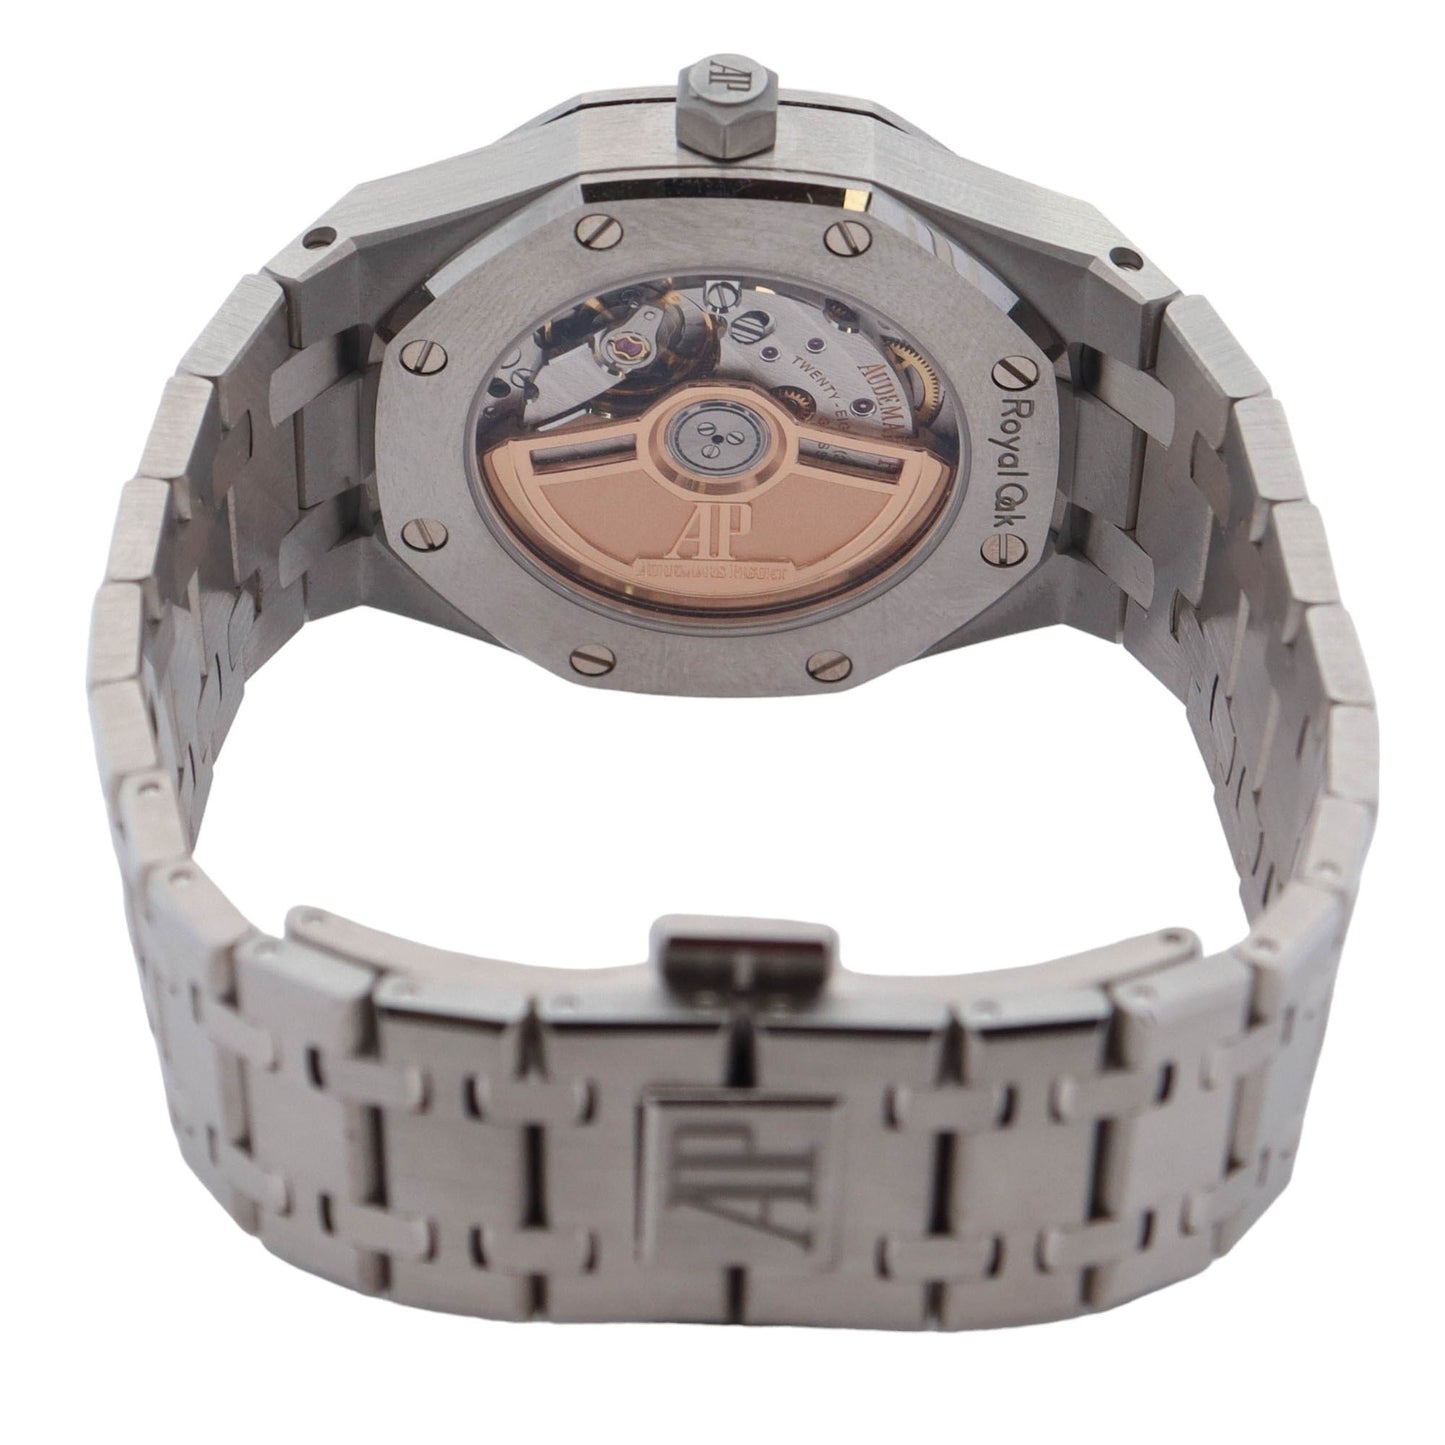 Audemars Piguet Royal Oak Stainless Steel 34mm White Stick Dial Watch Reference# 77450ST.OO.1361ST.02 - Happy Jewelers Fine Jewelry Lifetime Warranty